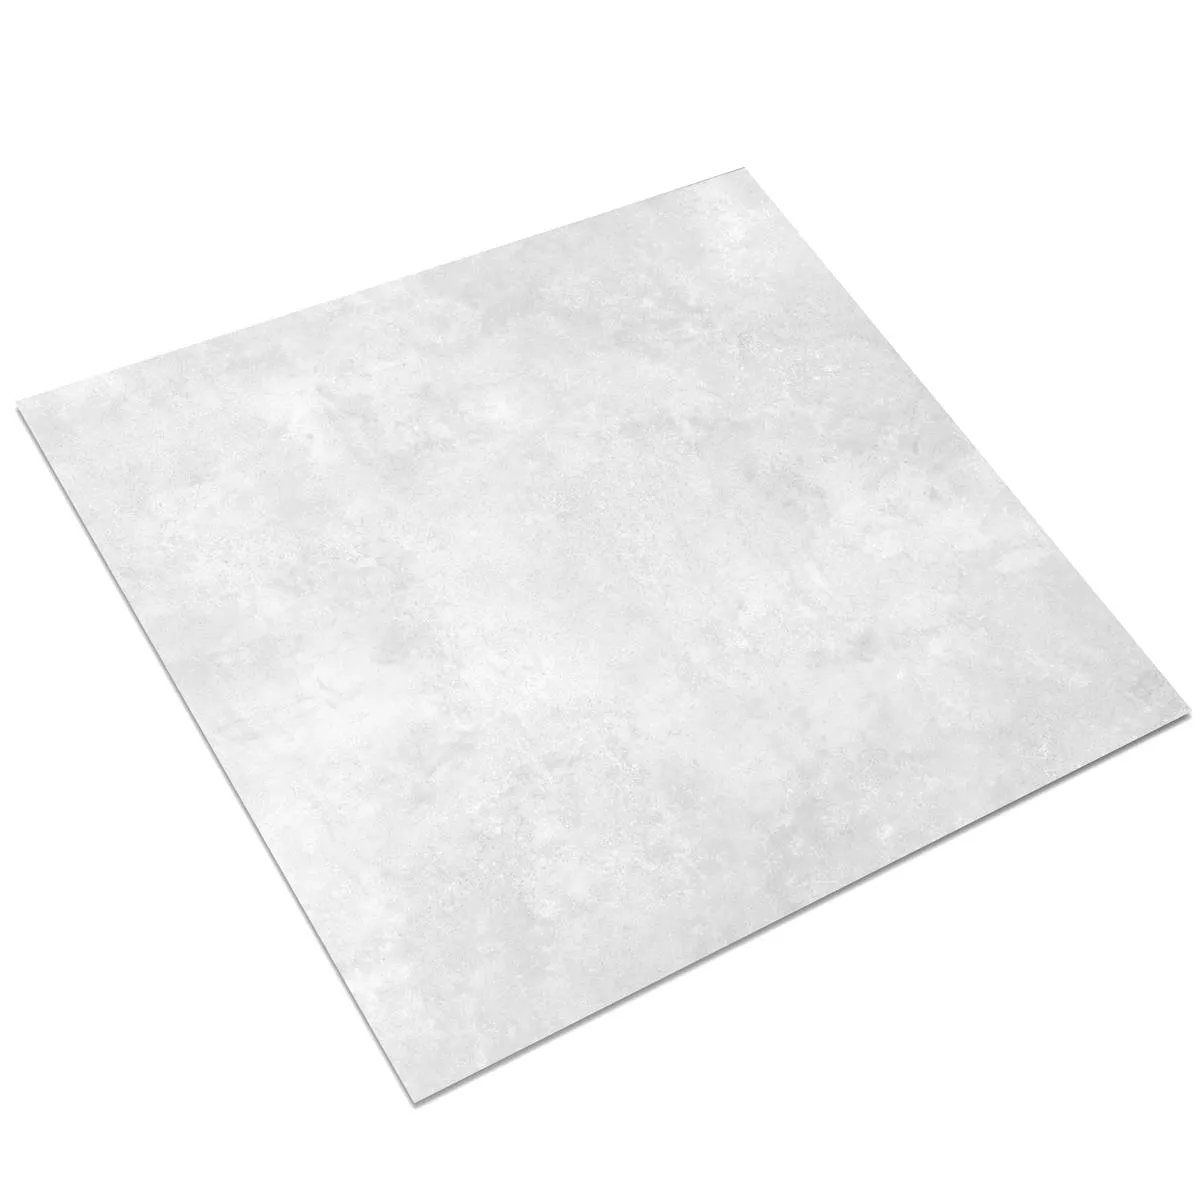 Sample Floor Tiles Illusion Metal Optic Lappato White 60x60cm